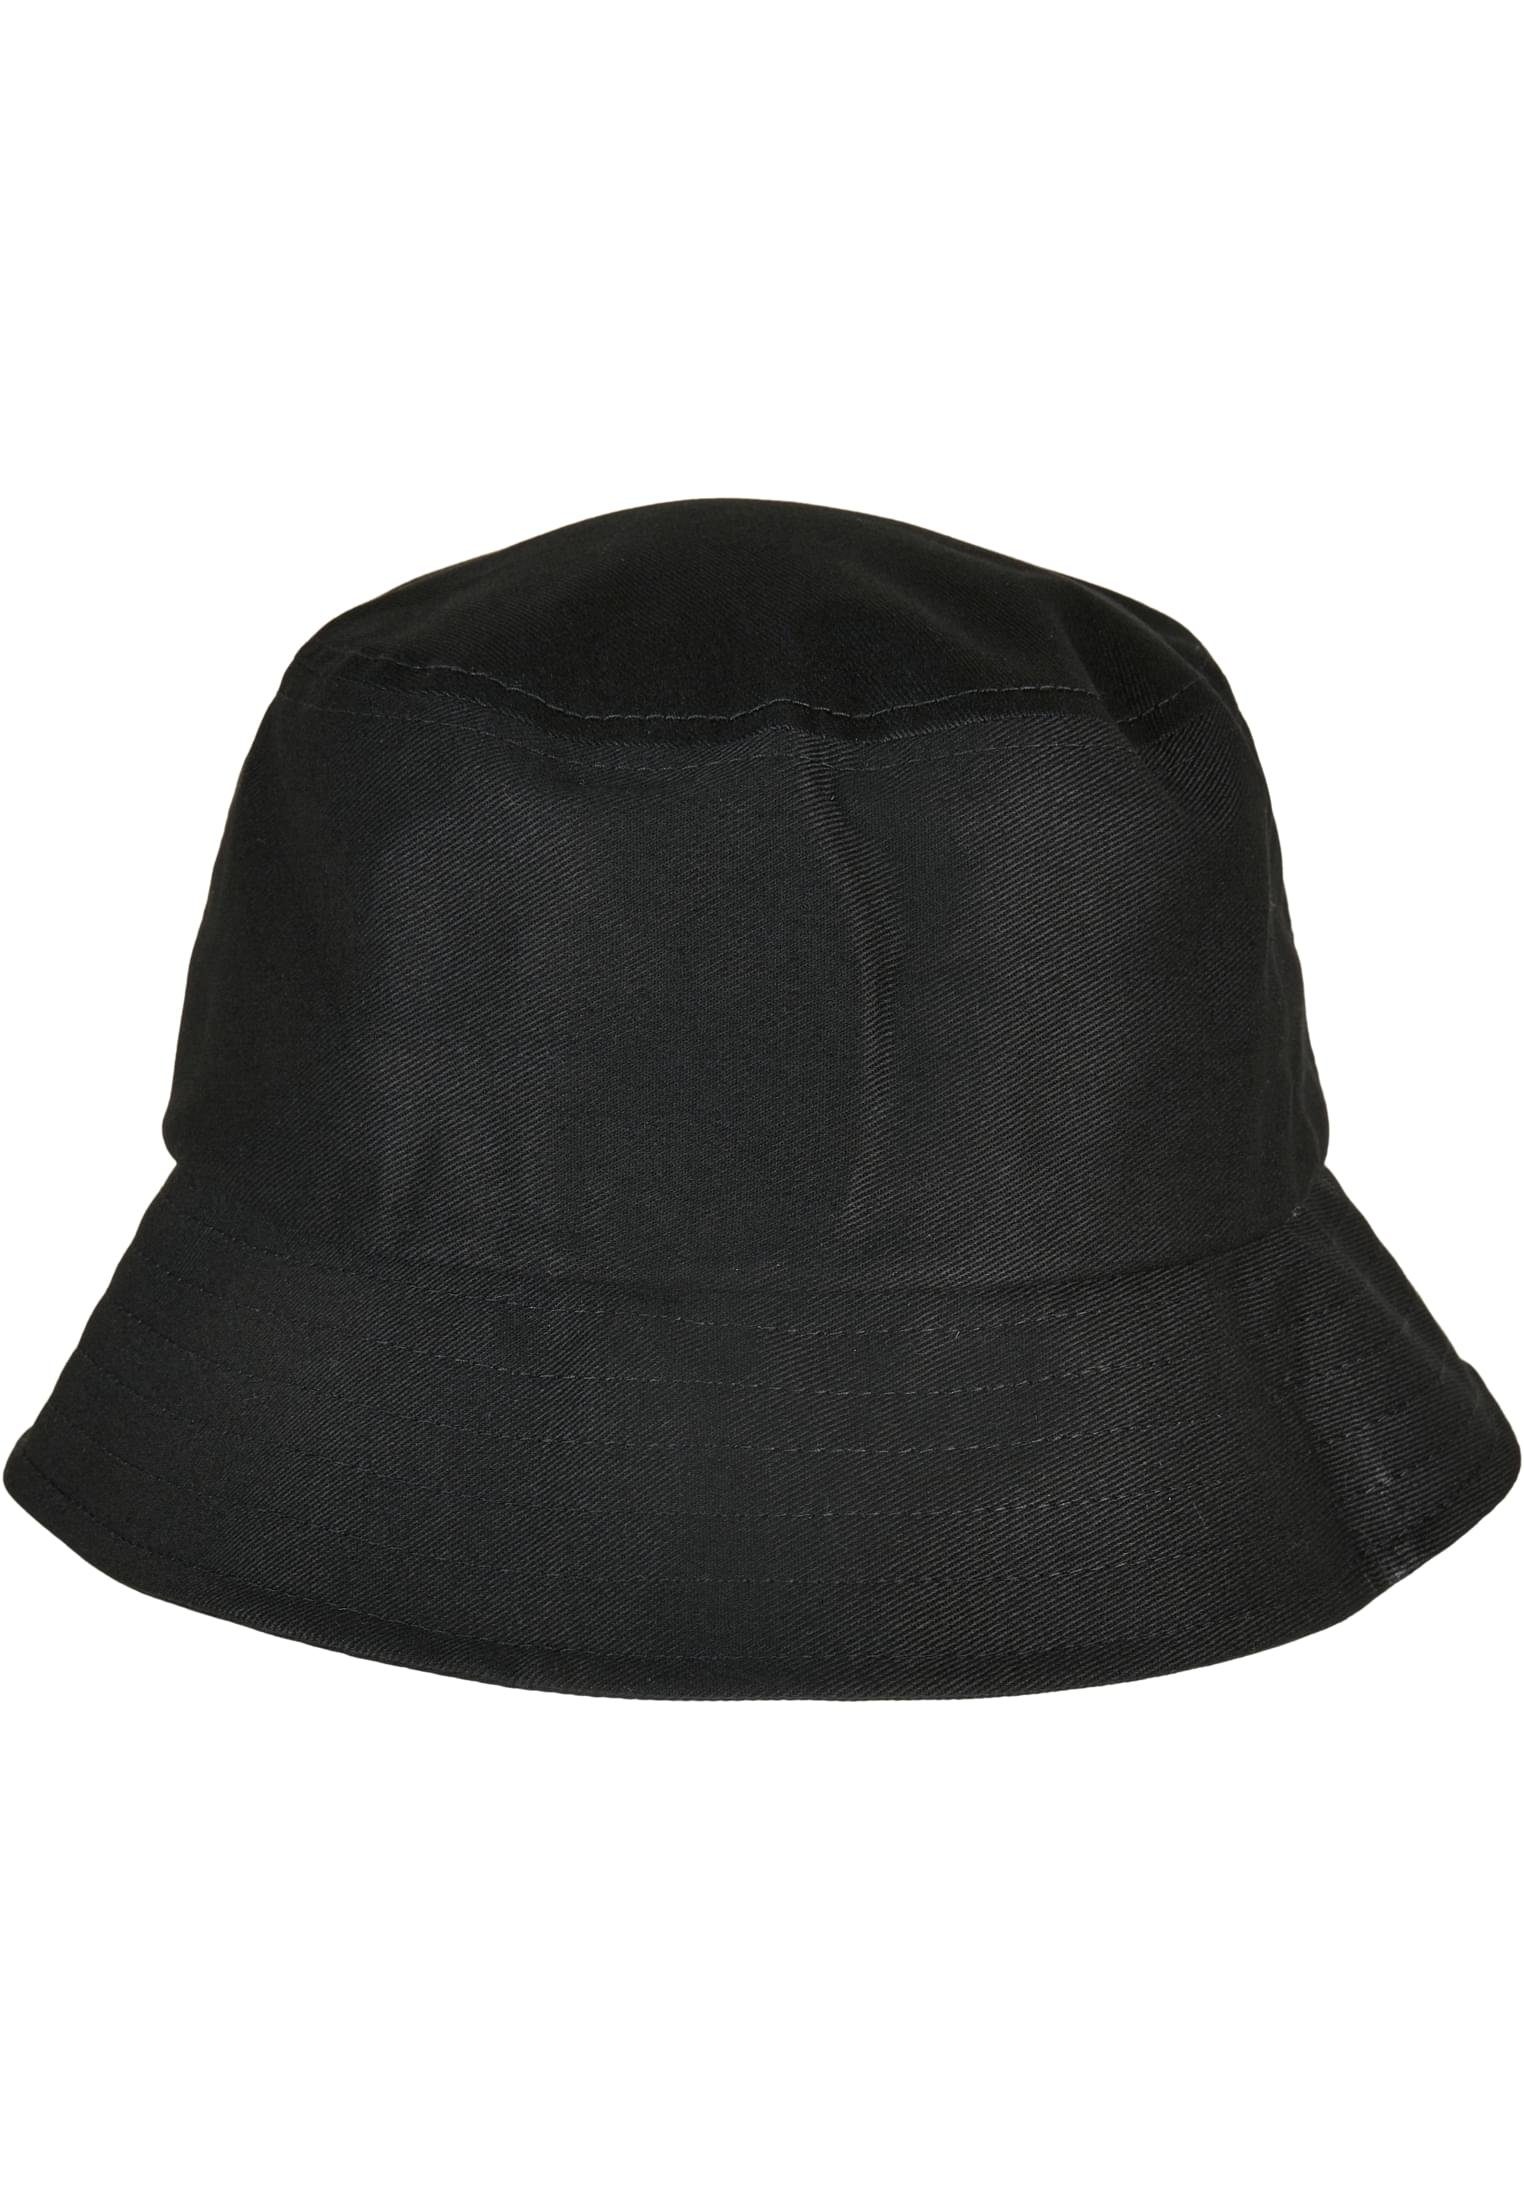 Cap Bucket Label Flex Black Basic Accessoires Starter Hat